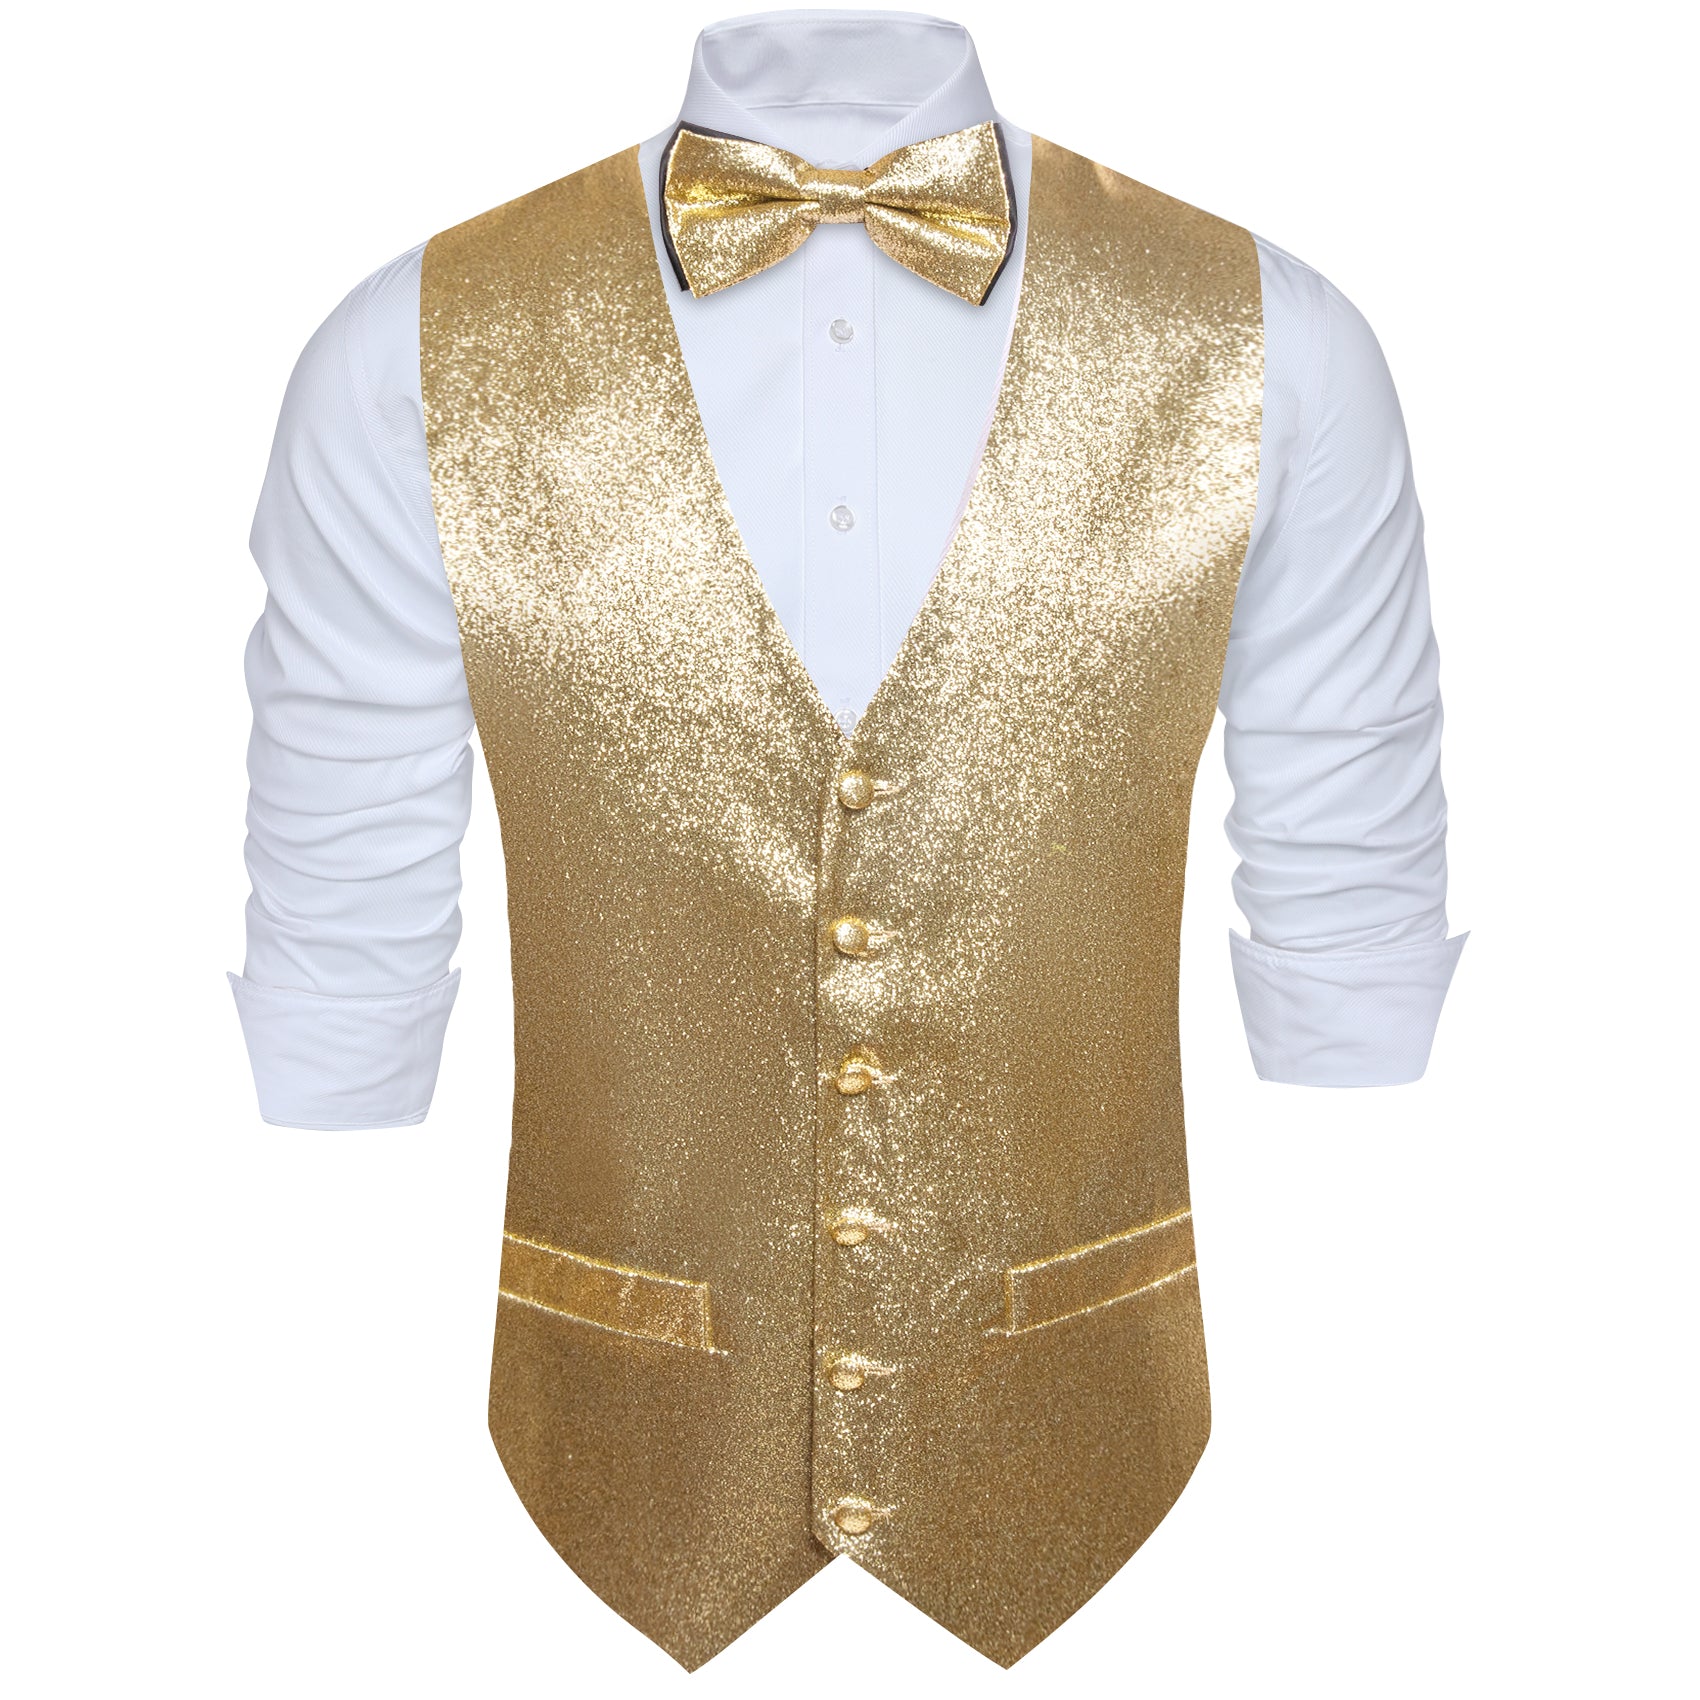 Barry.wang Men's Vest Shining Gold Solid Silk Bow Tie V-Neck Waistcoat Set